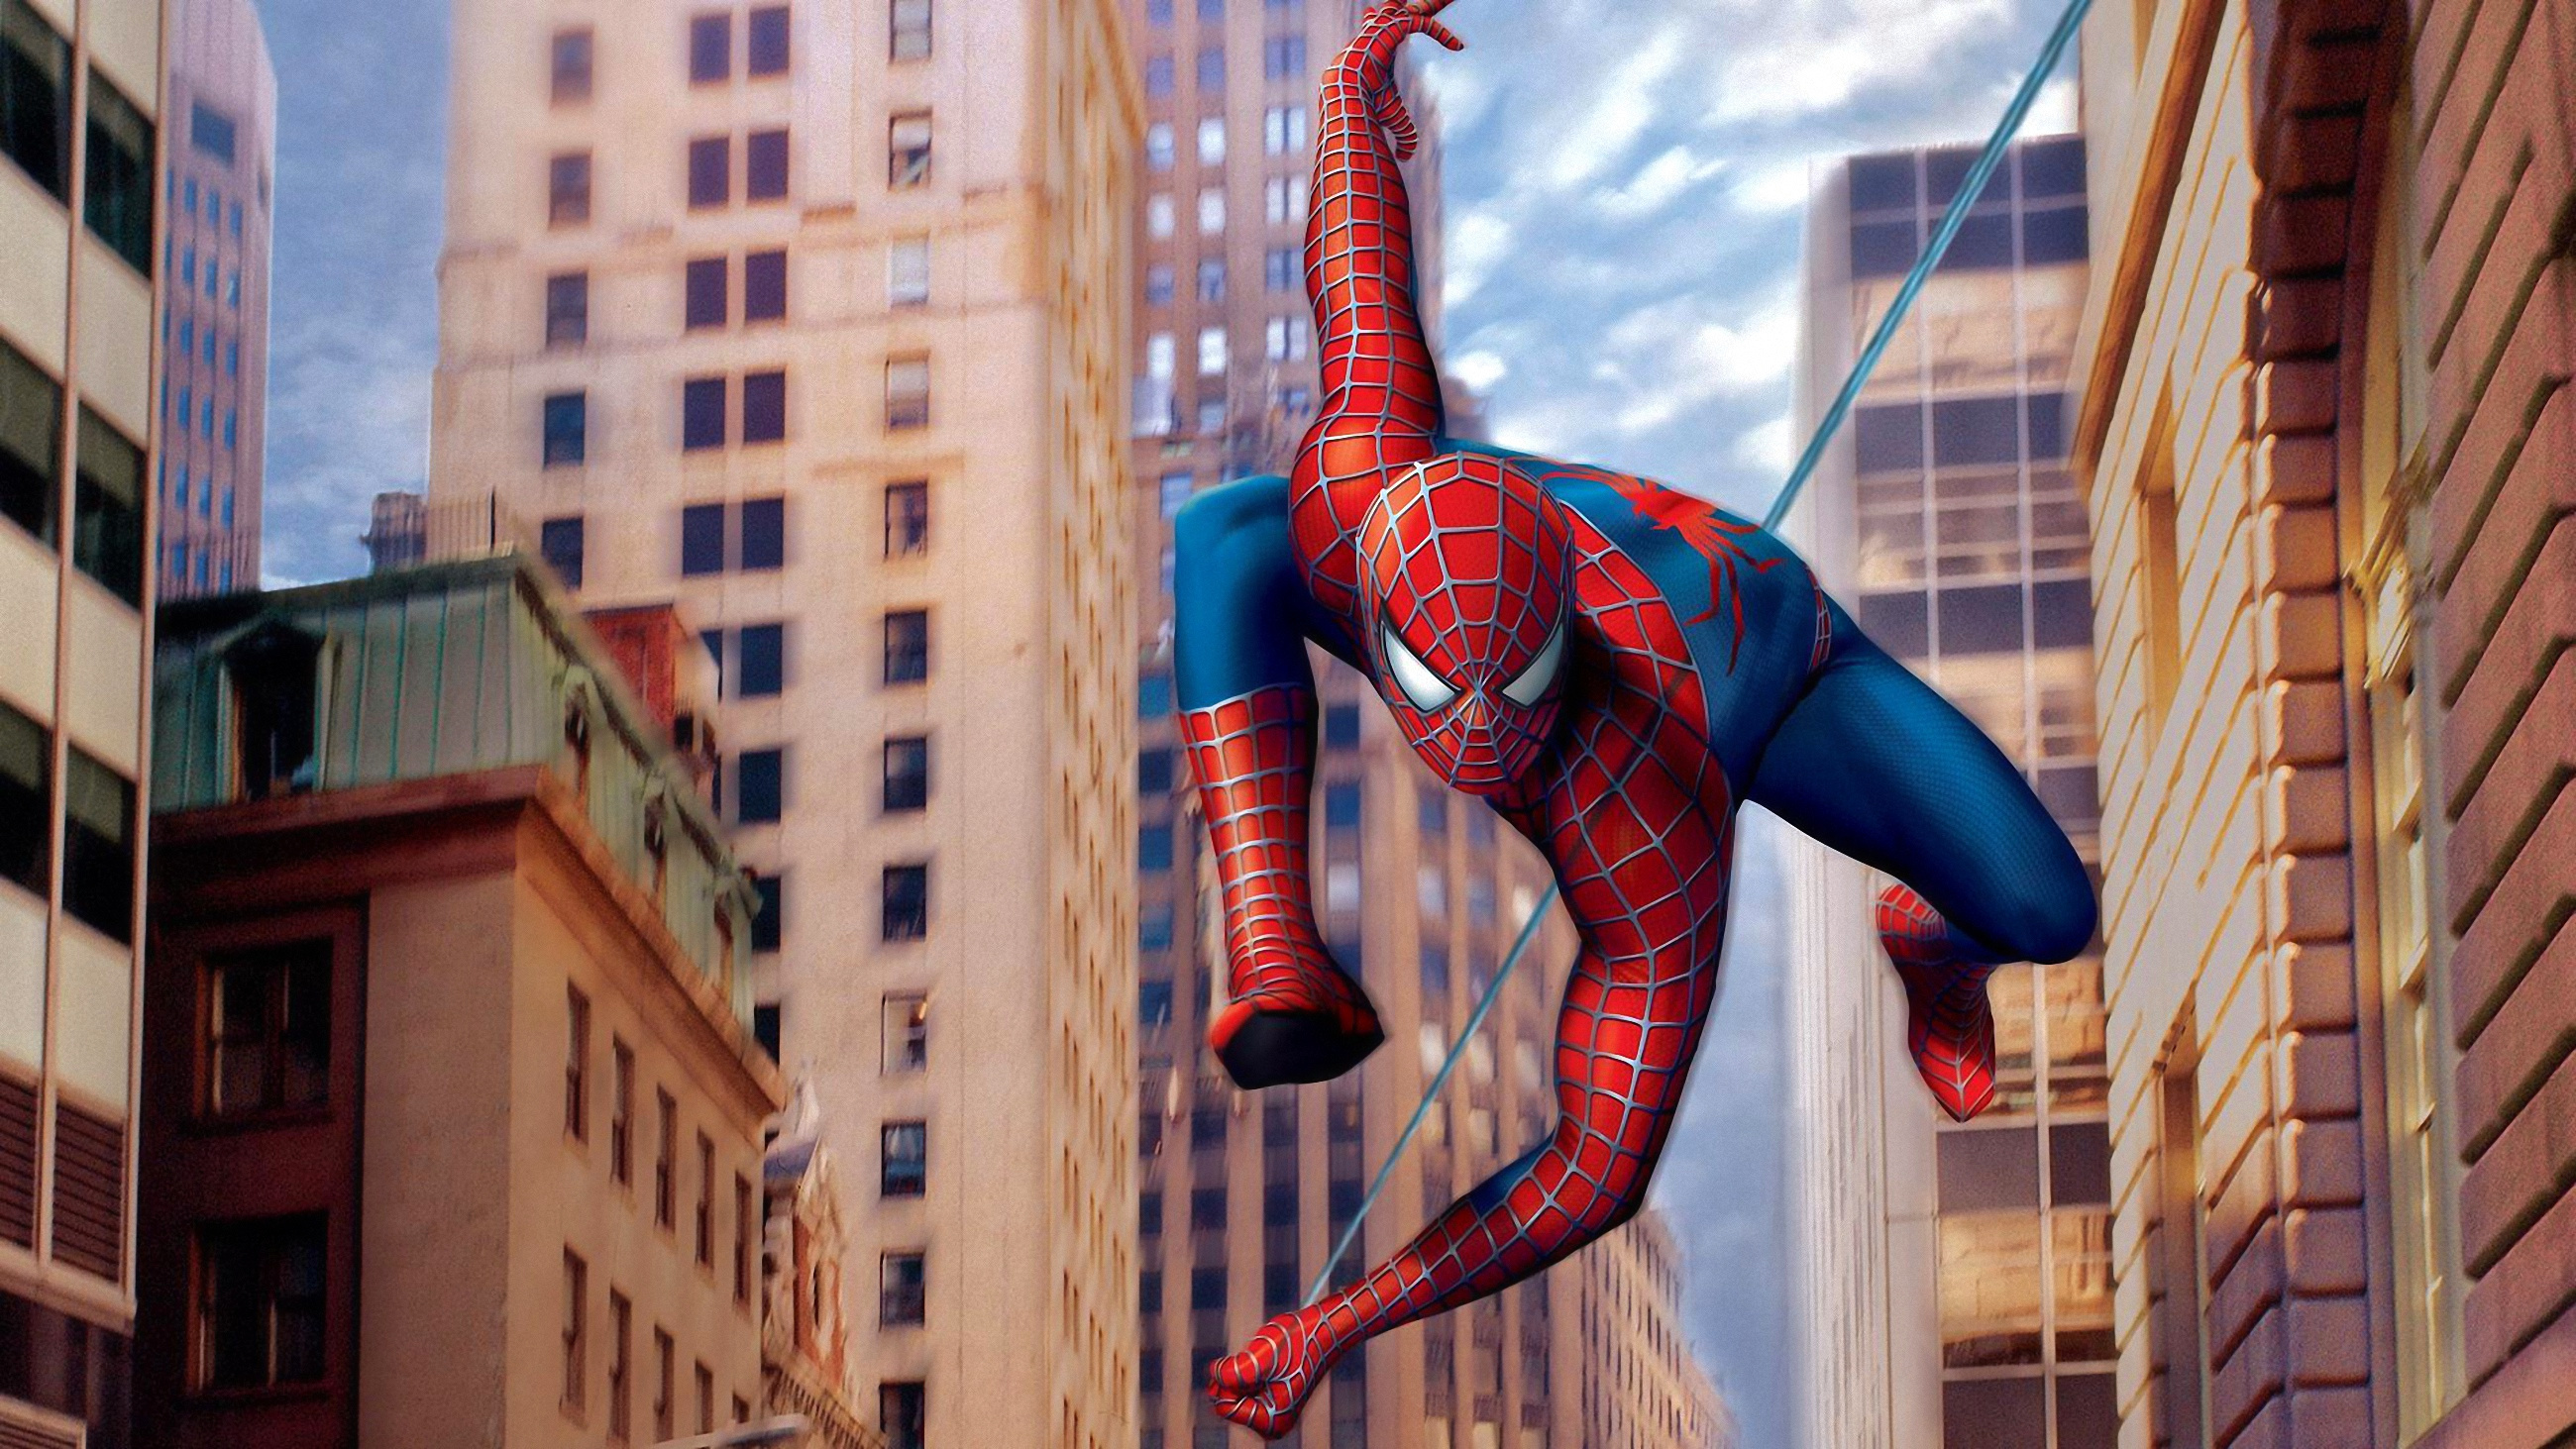 368703 descargar imagen videojuego, the amazing spider man, hombre araña: fondos de pantalla y protectores de pantalla gratis